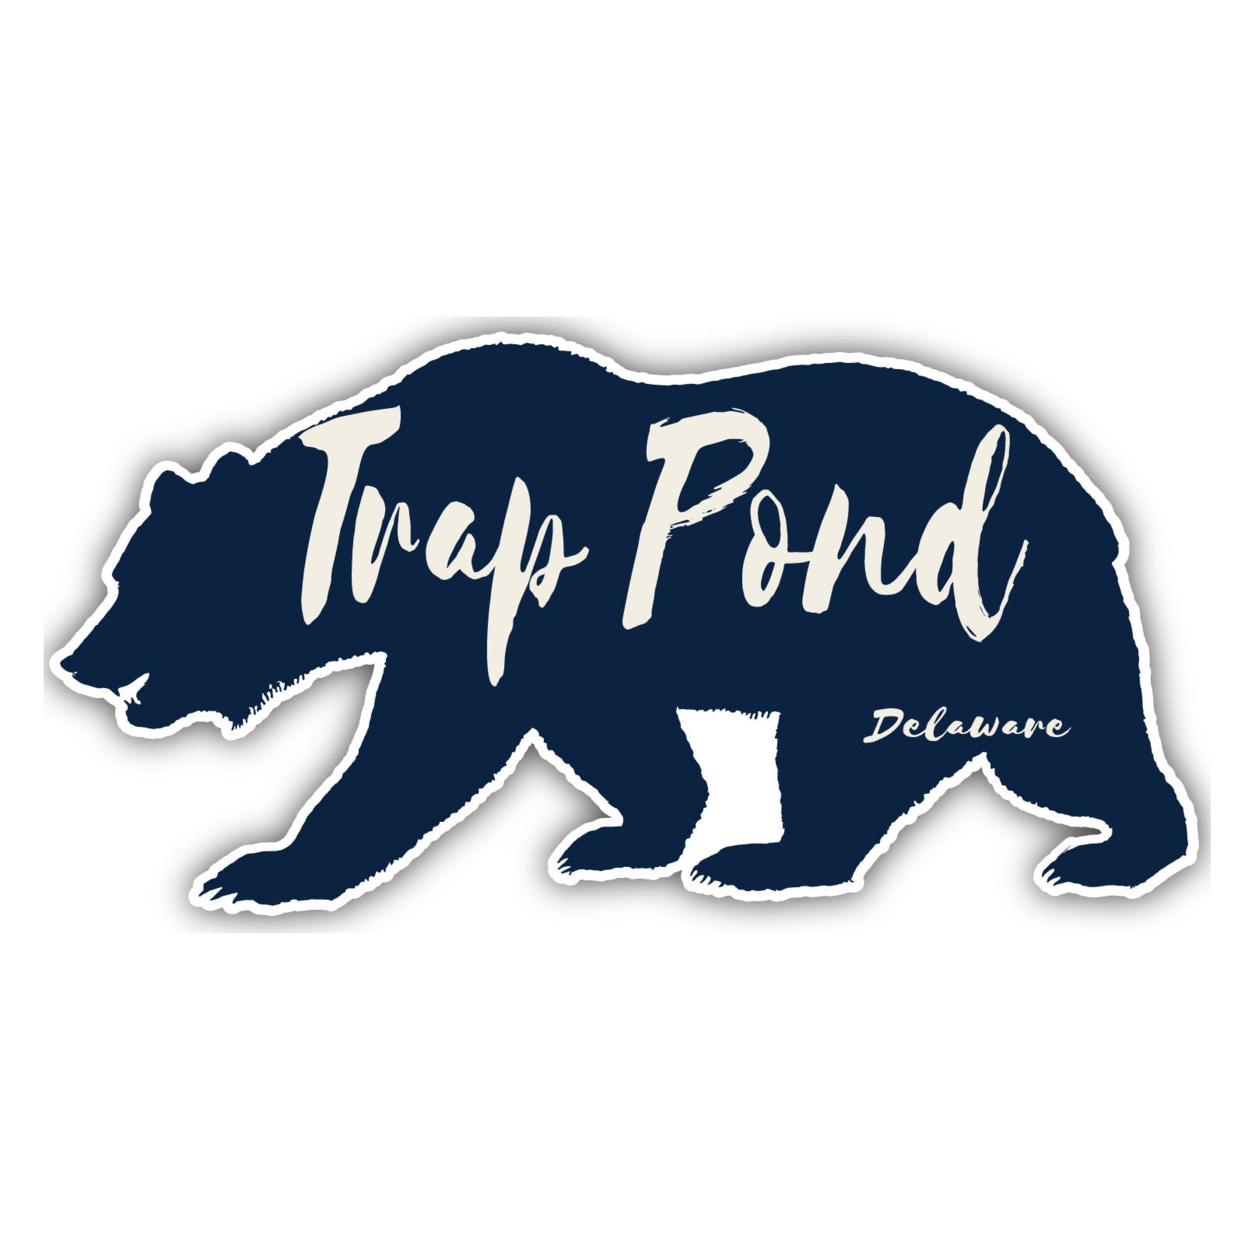 Trap Pond Delaware Souvenir Decorative Stickers (Choose Theme And Size) - Single Unit, 4-Inch, Bear